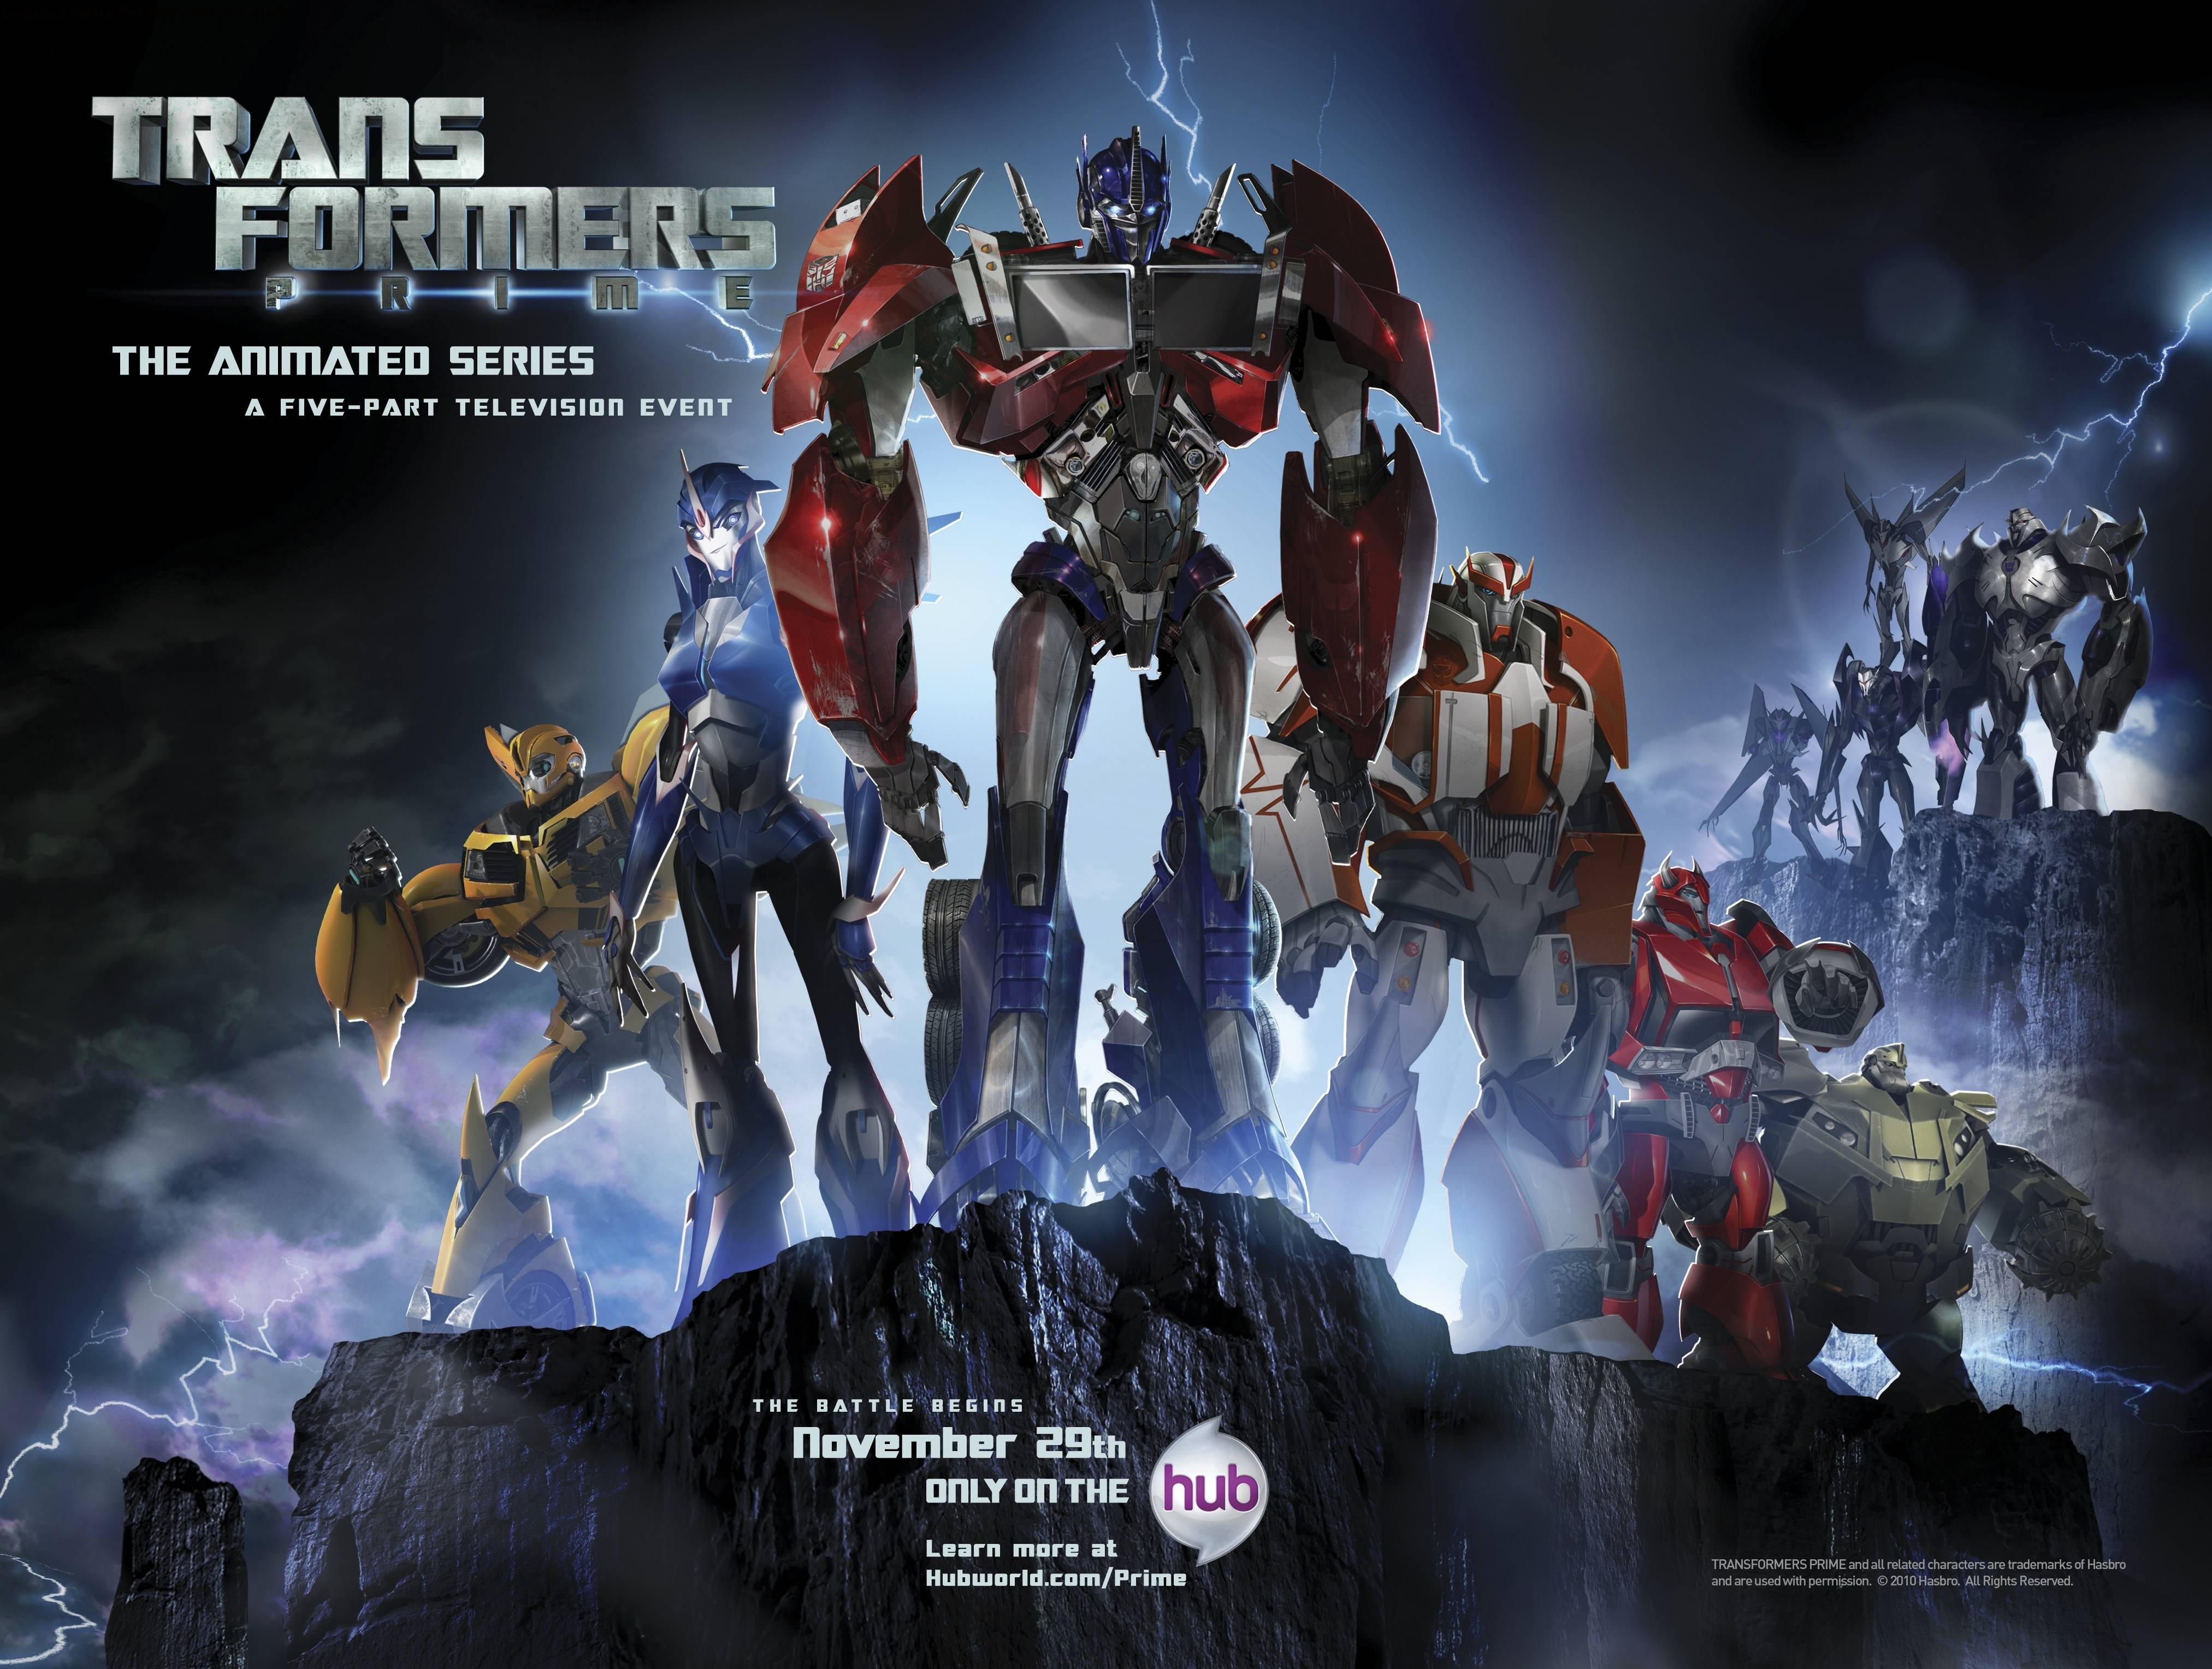 transformers prime beast hunters full movie